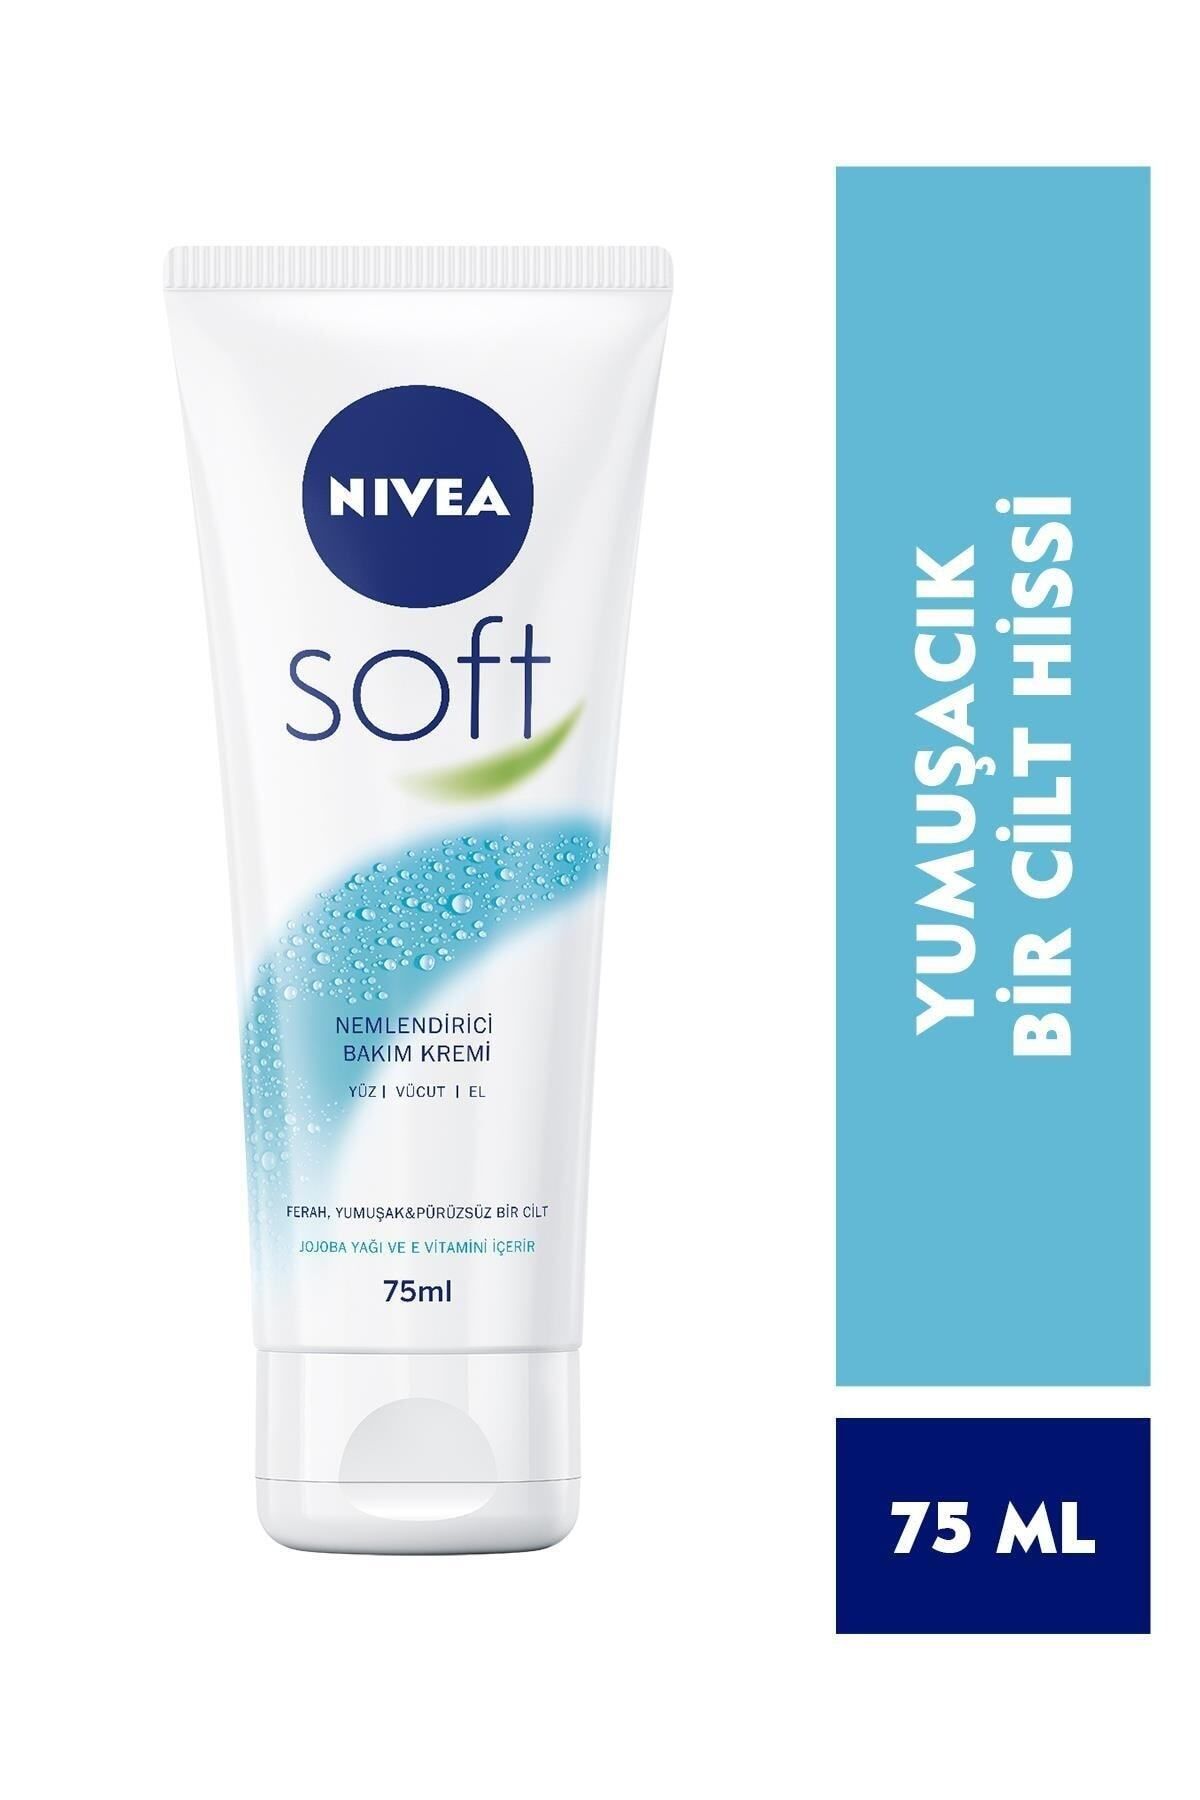 NIVEA Soft Cream 75ml, Moisturizing Care Cream, Face, Body, Hand, Skin Care with Jojoba Oil and Vitamin E